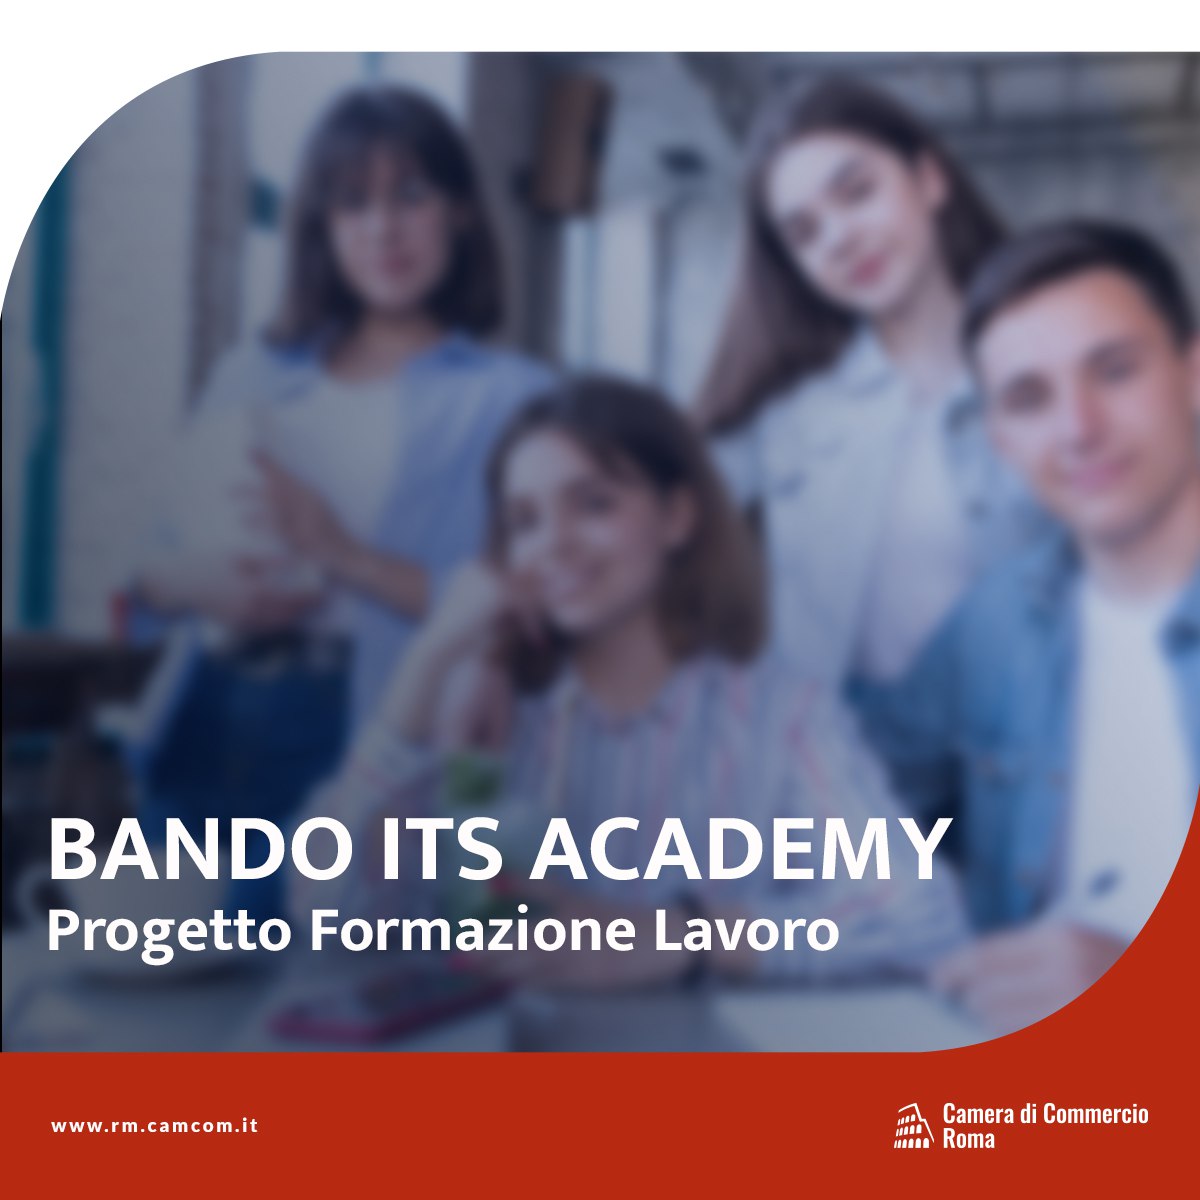 Bando ITS Academy